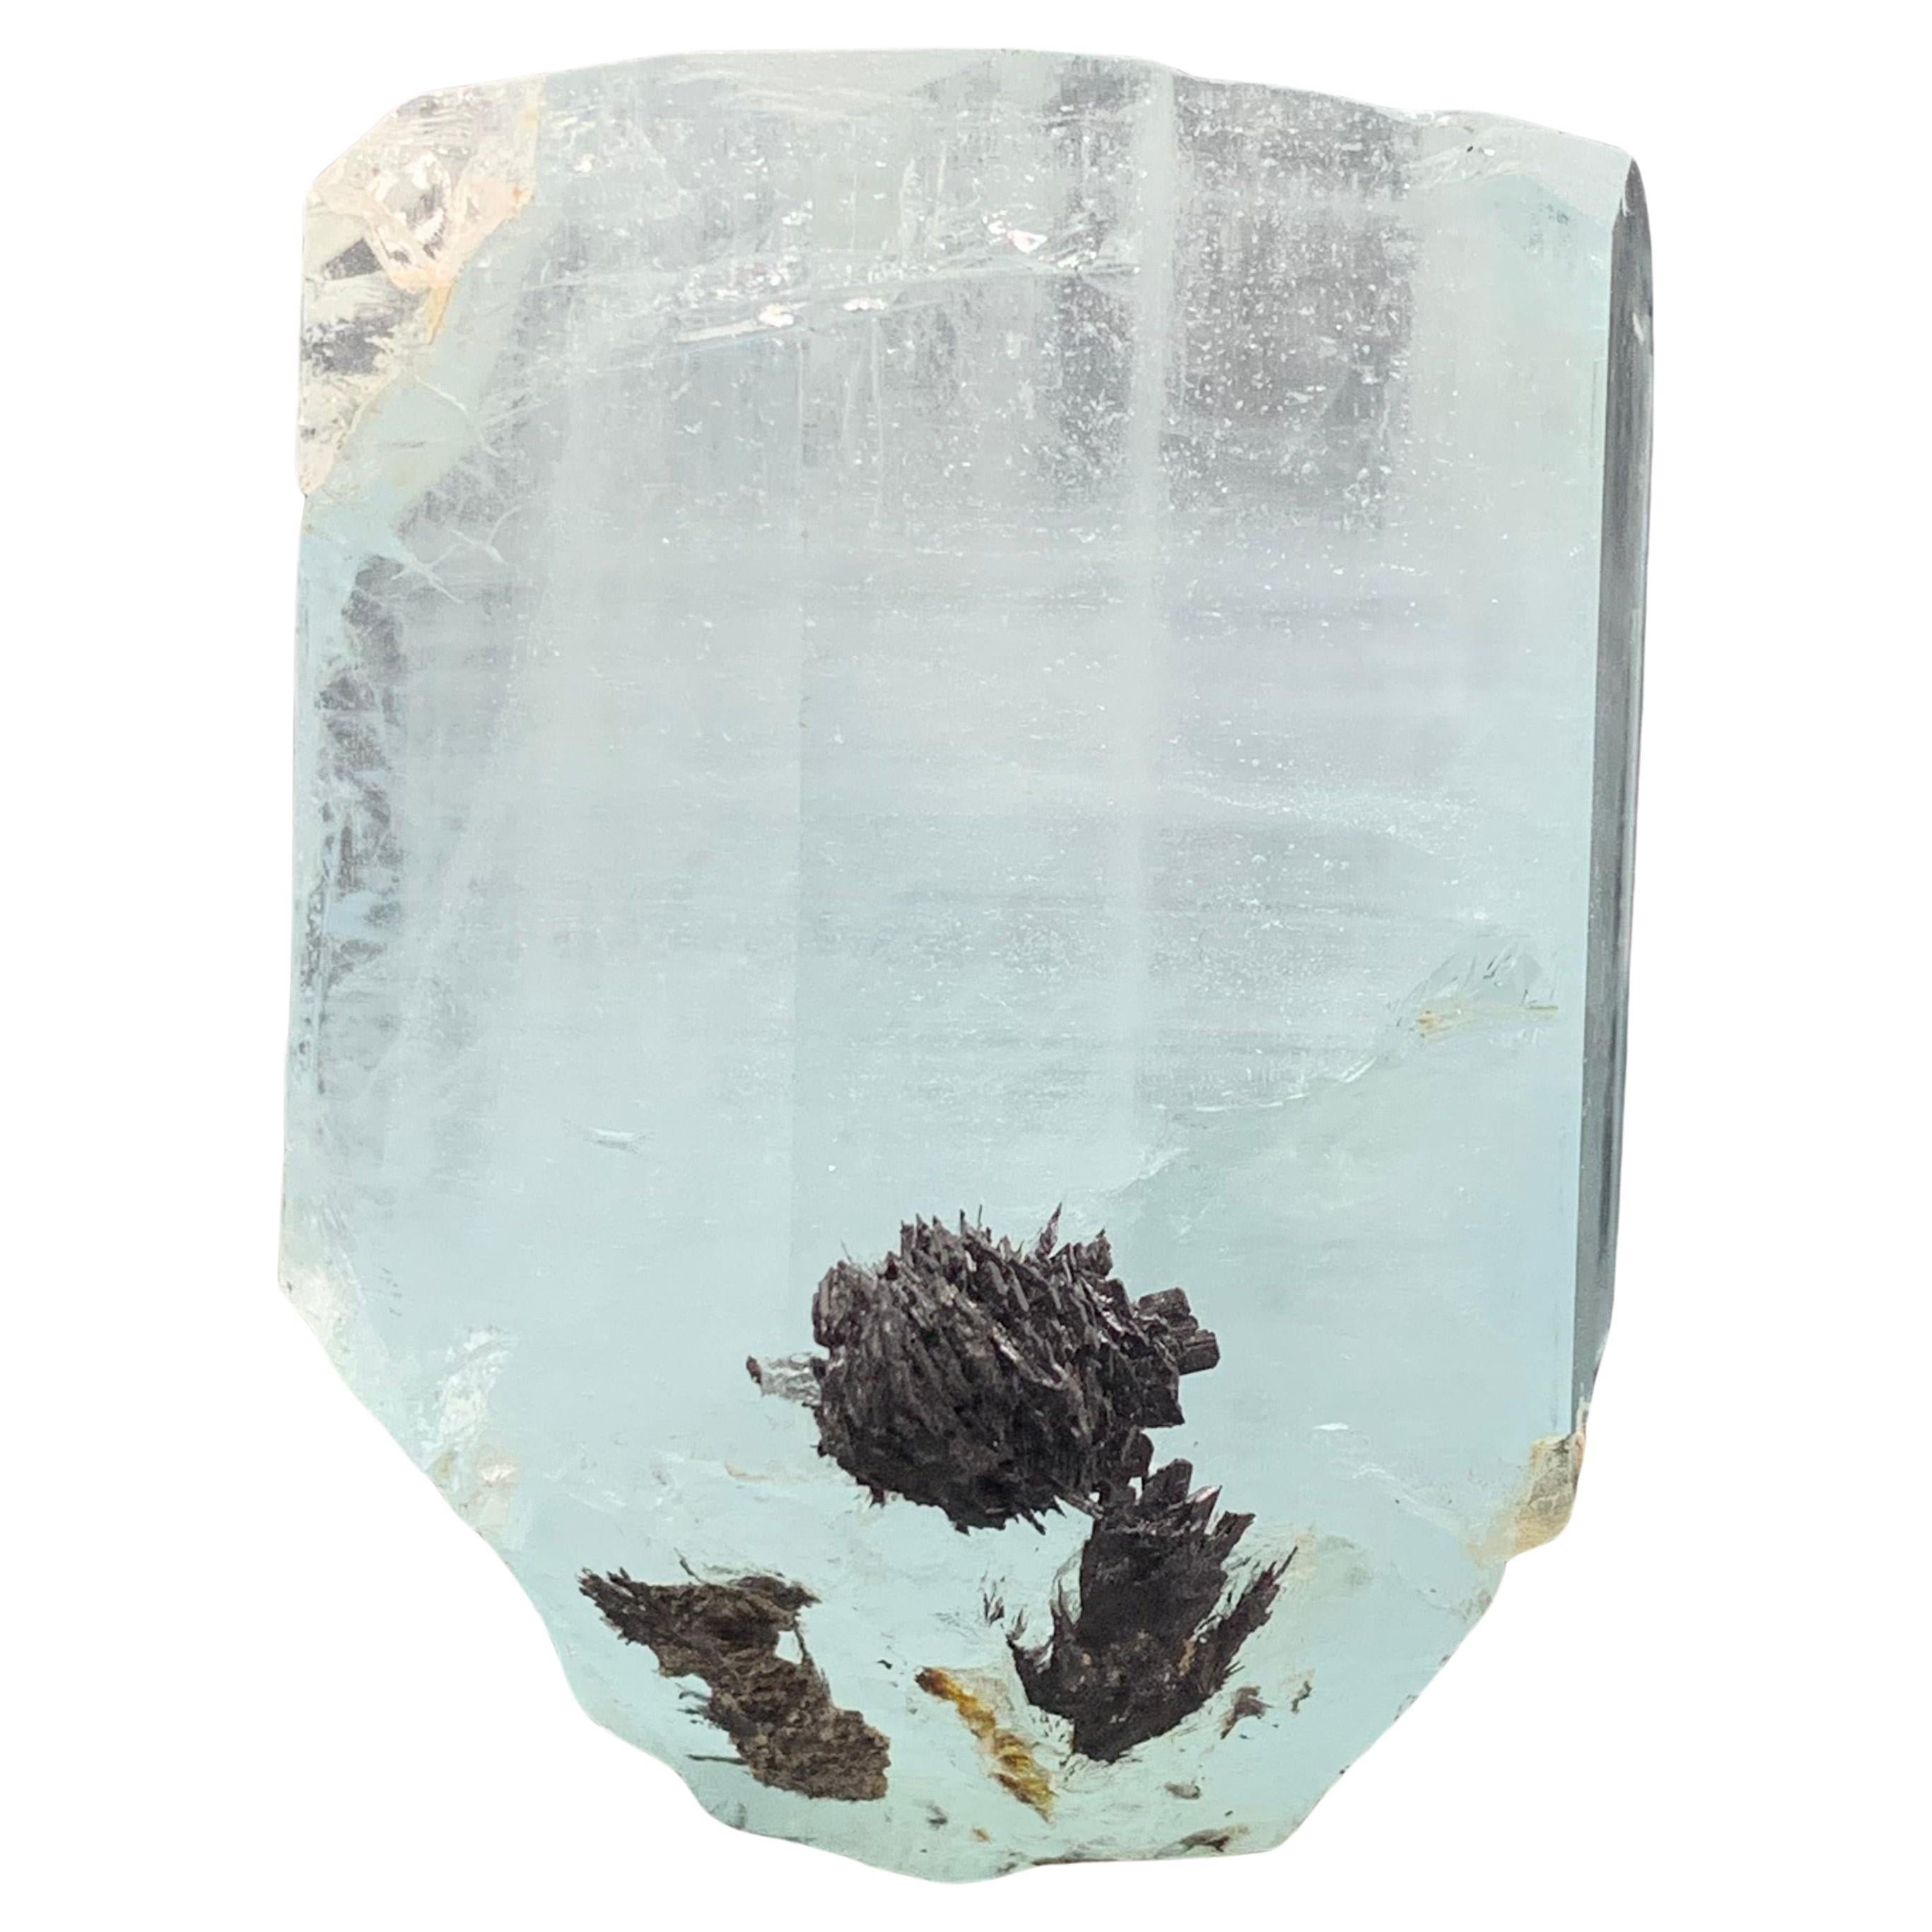 207.25 Gram Aquamarine Specimen With Schorl From Shigar Valley, Skardu, Pakistan For Sale